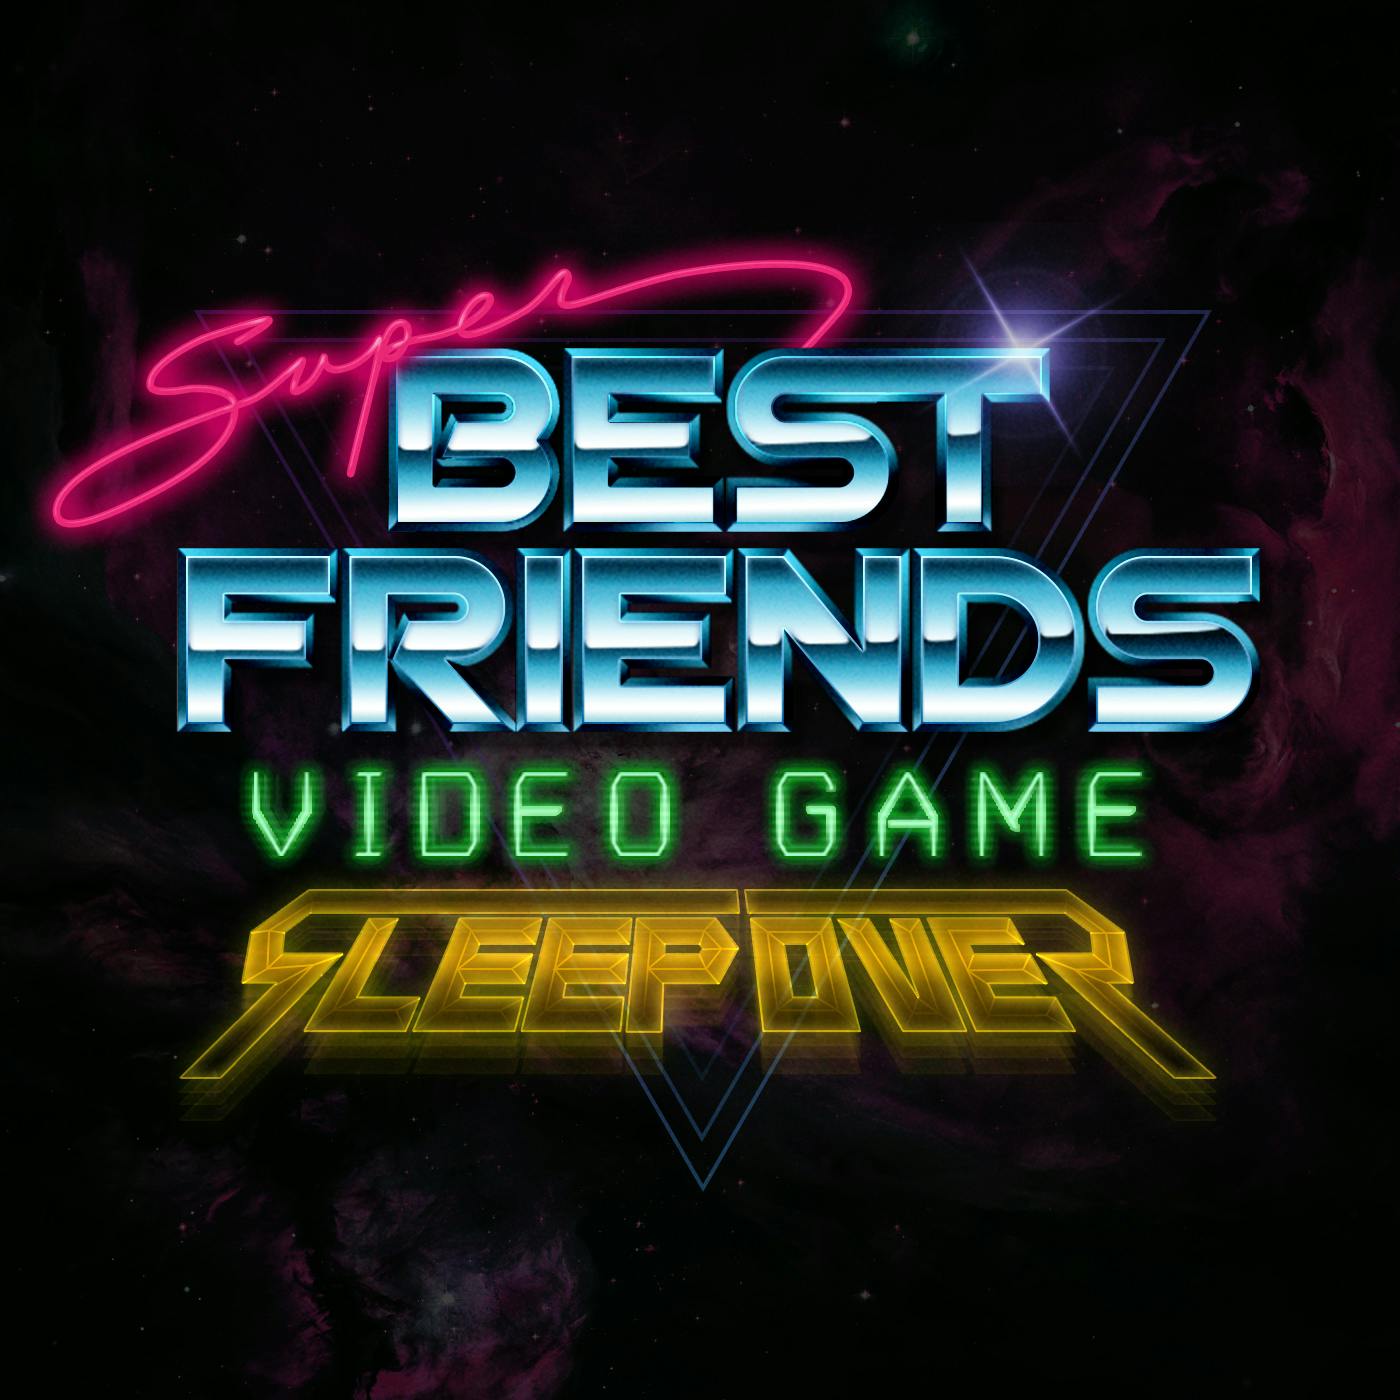 Super Best Friends Video Game Sleepover - Episode 36